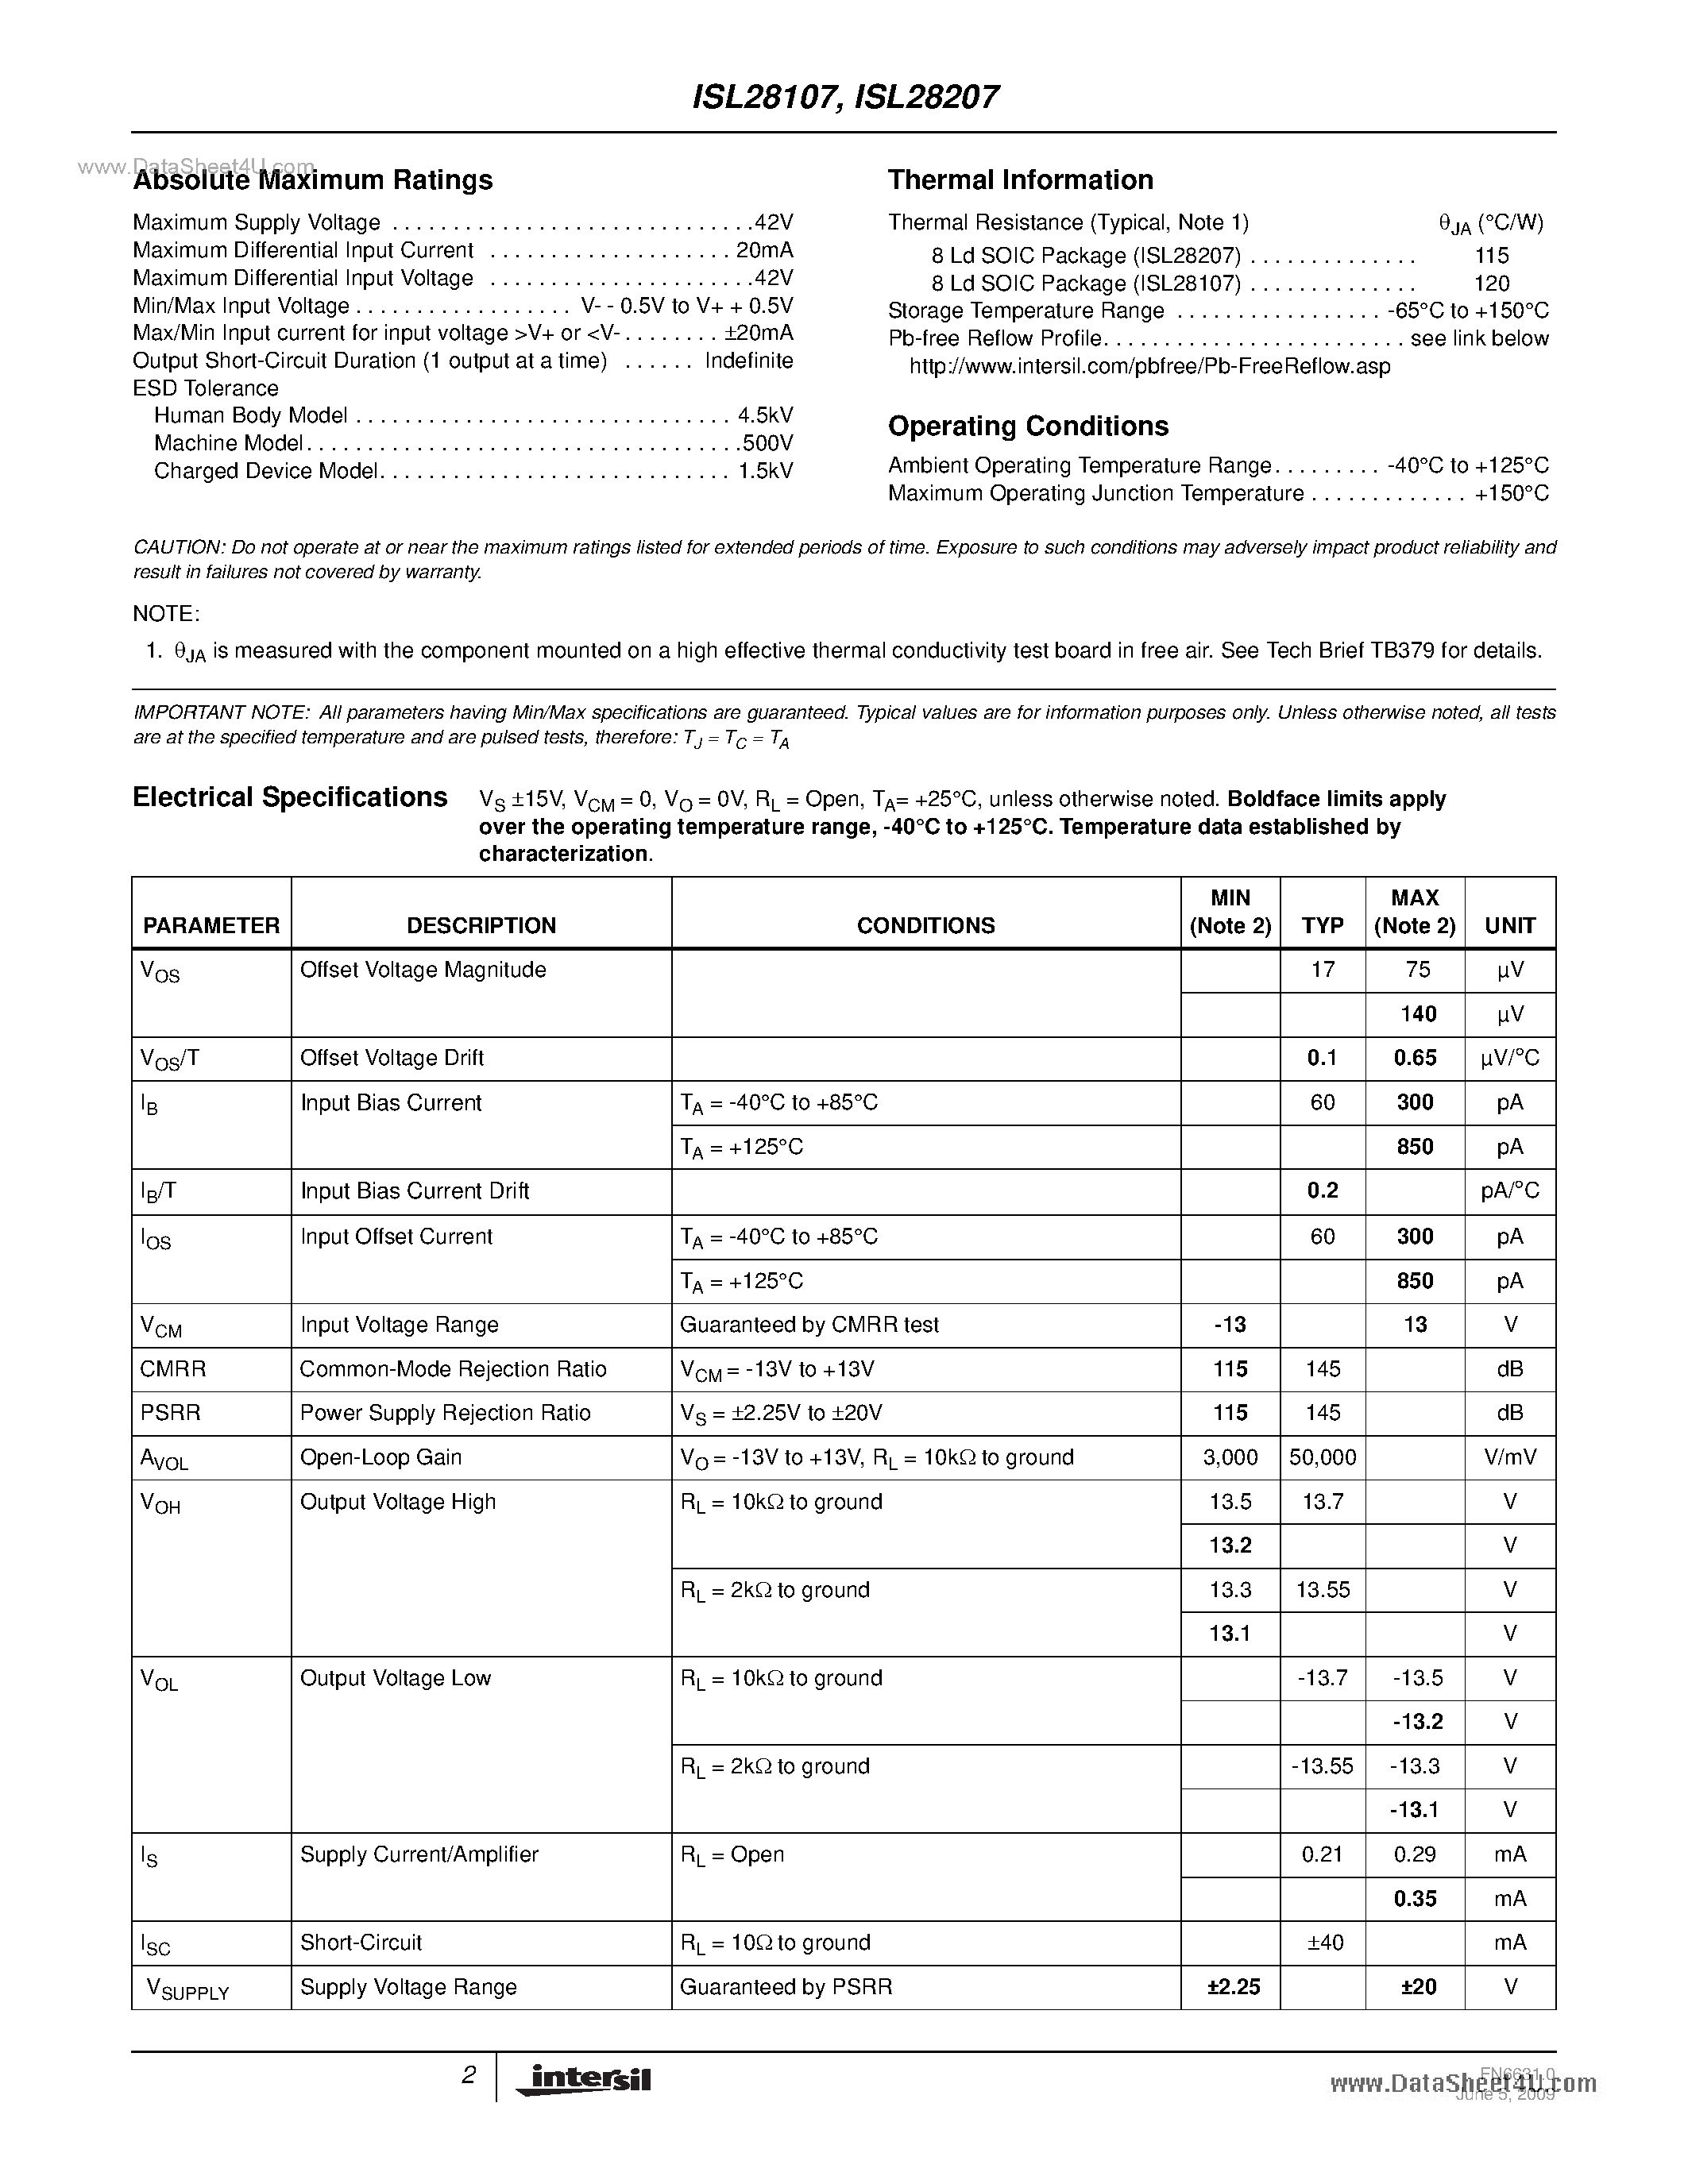 Datasheet ISL28207 - (ISL28107 / ISL28207) RS-485/RS-422 Transceivers page 2